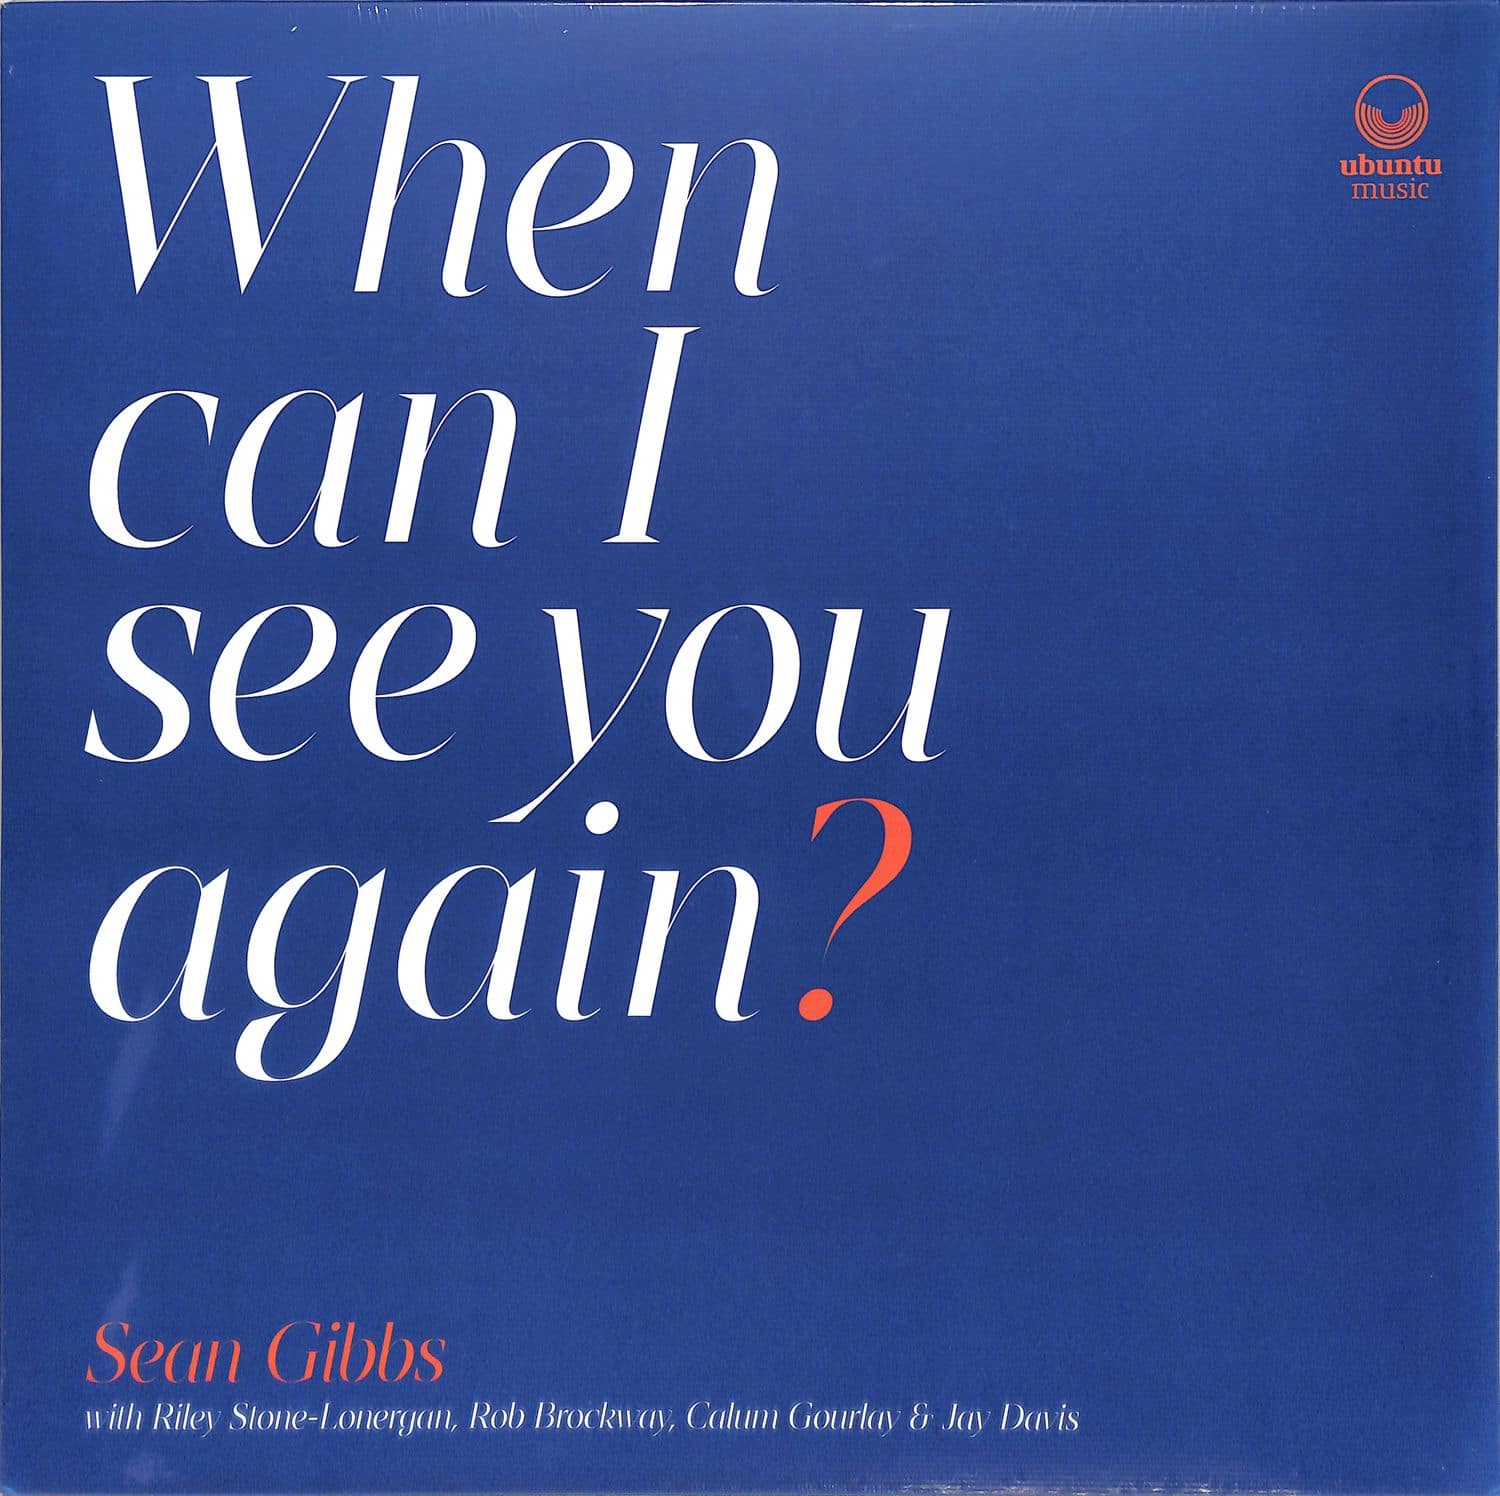 Sean Gibbs - WHEN CAN I SEE YOU AGAIN? 